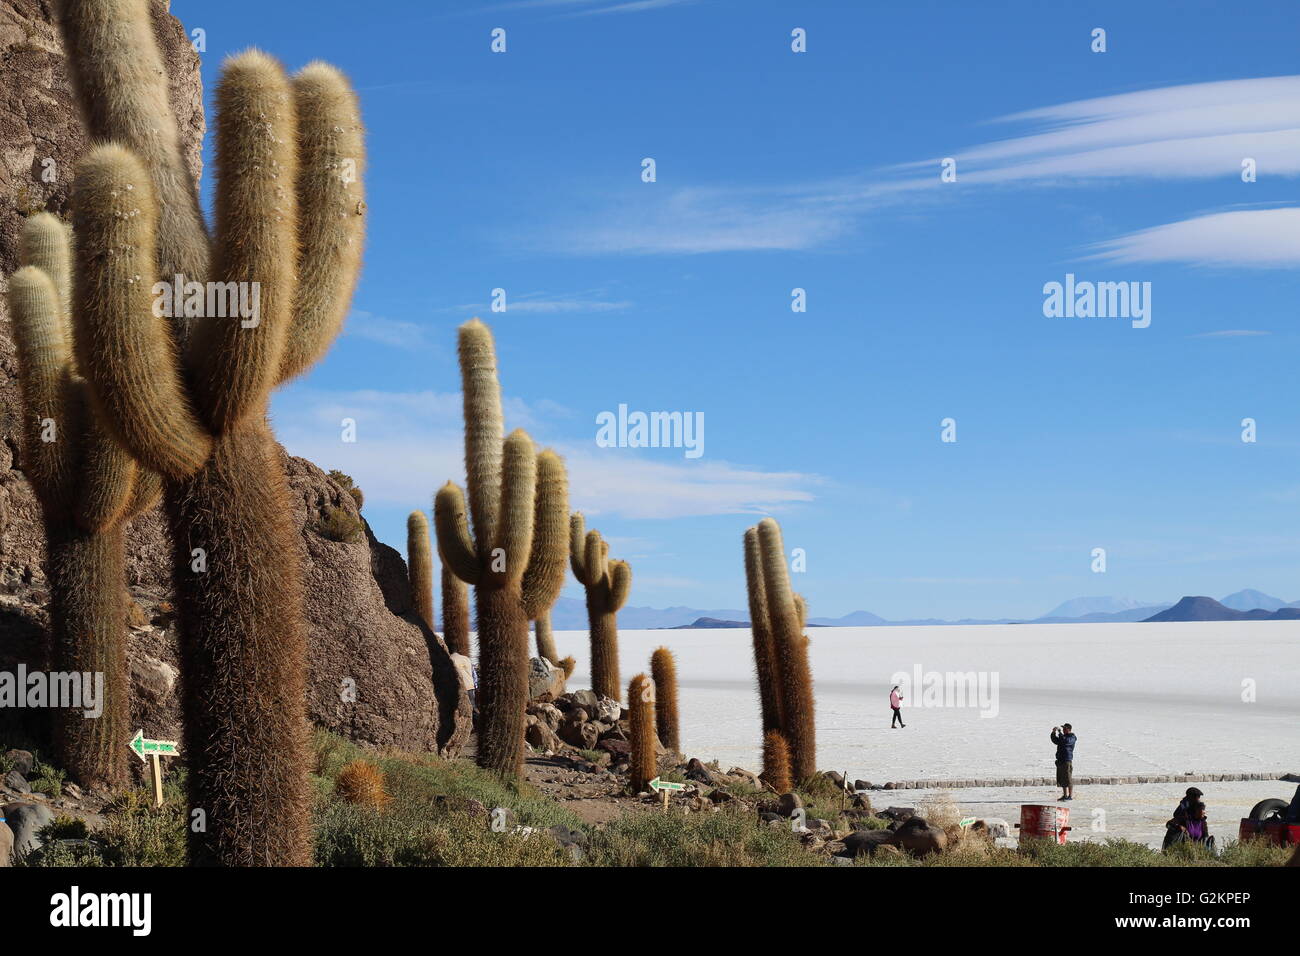 Giant cactus island in the salt flats of Bolivia Stock Photo